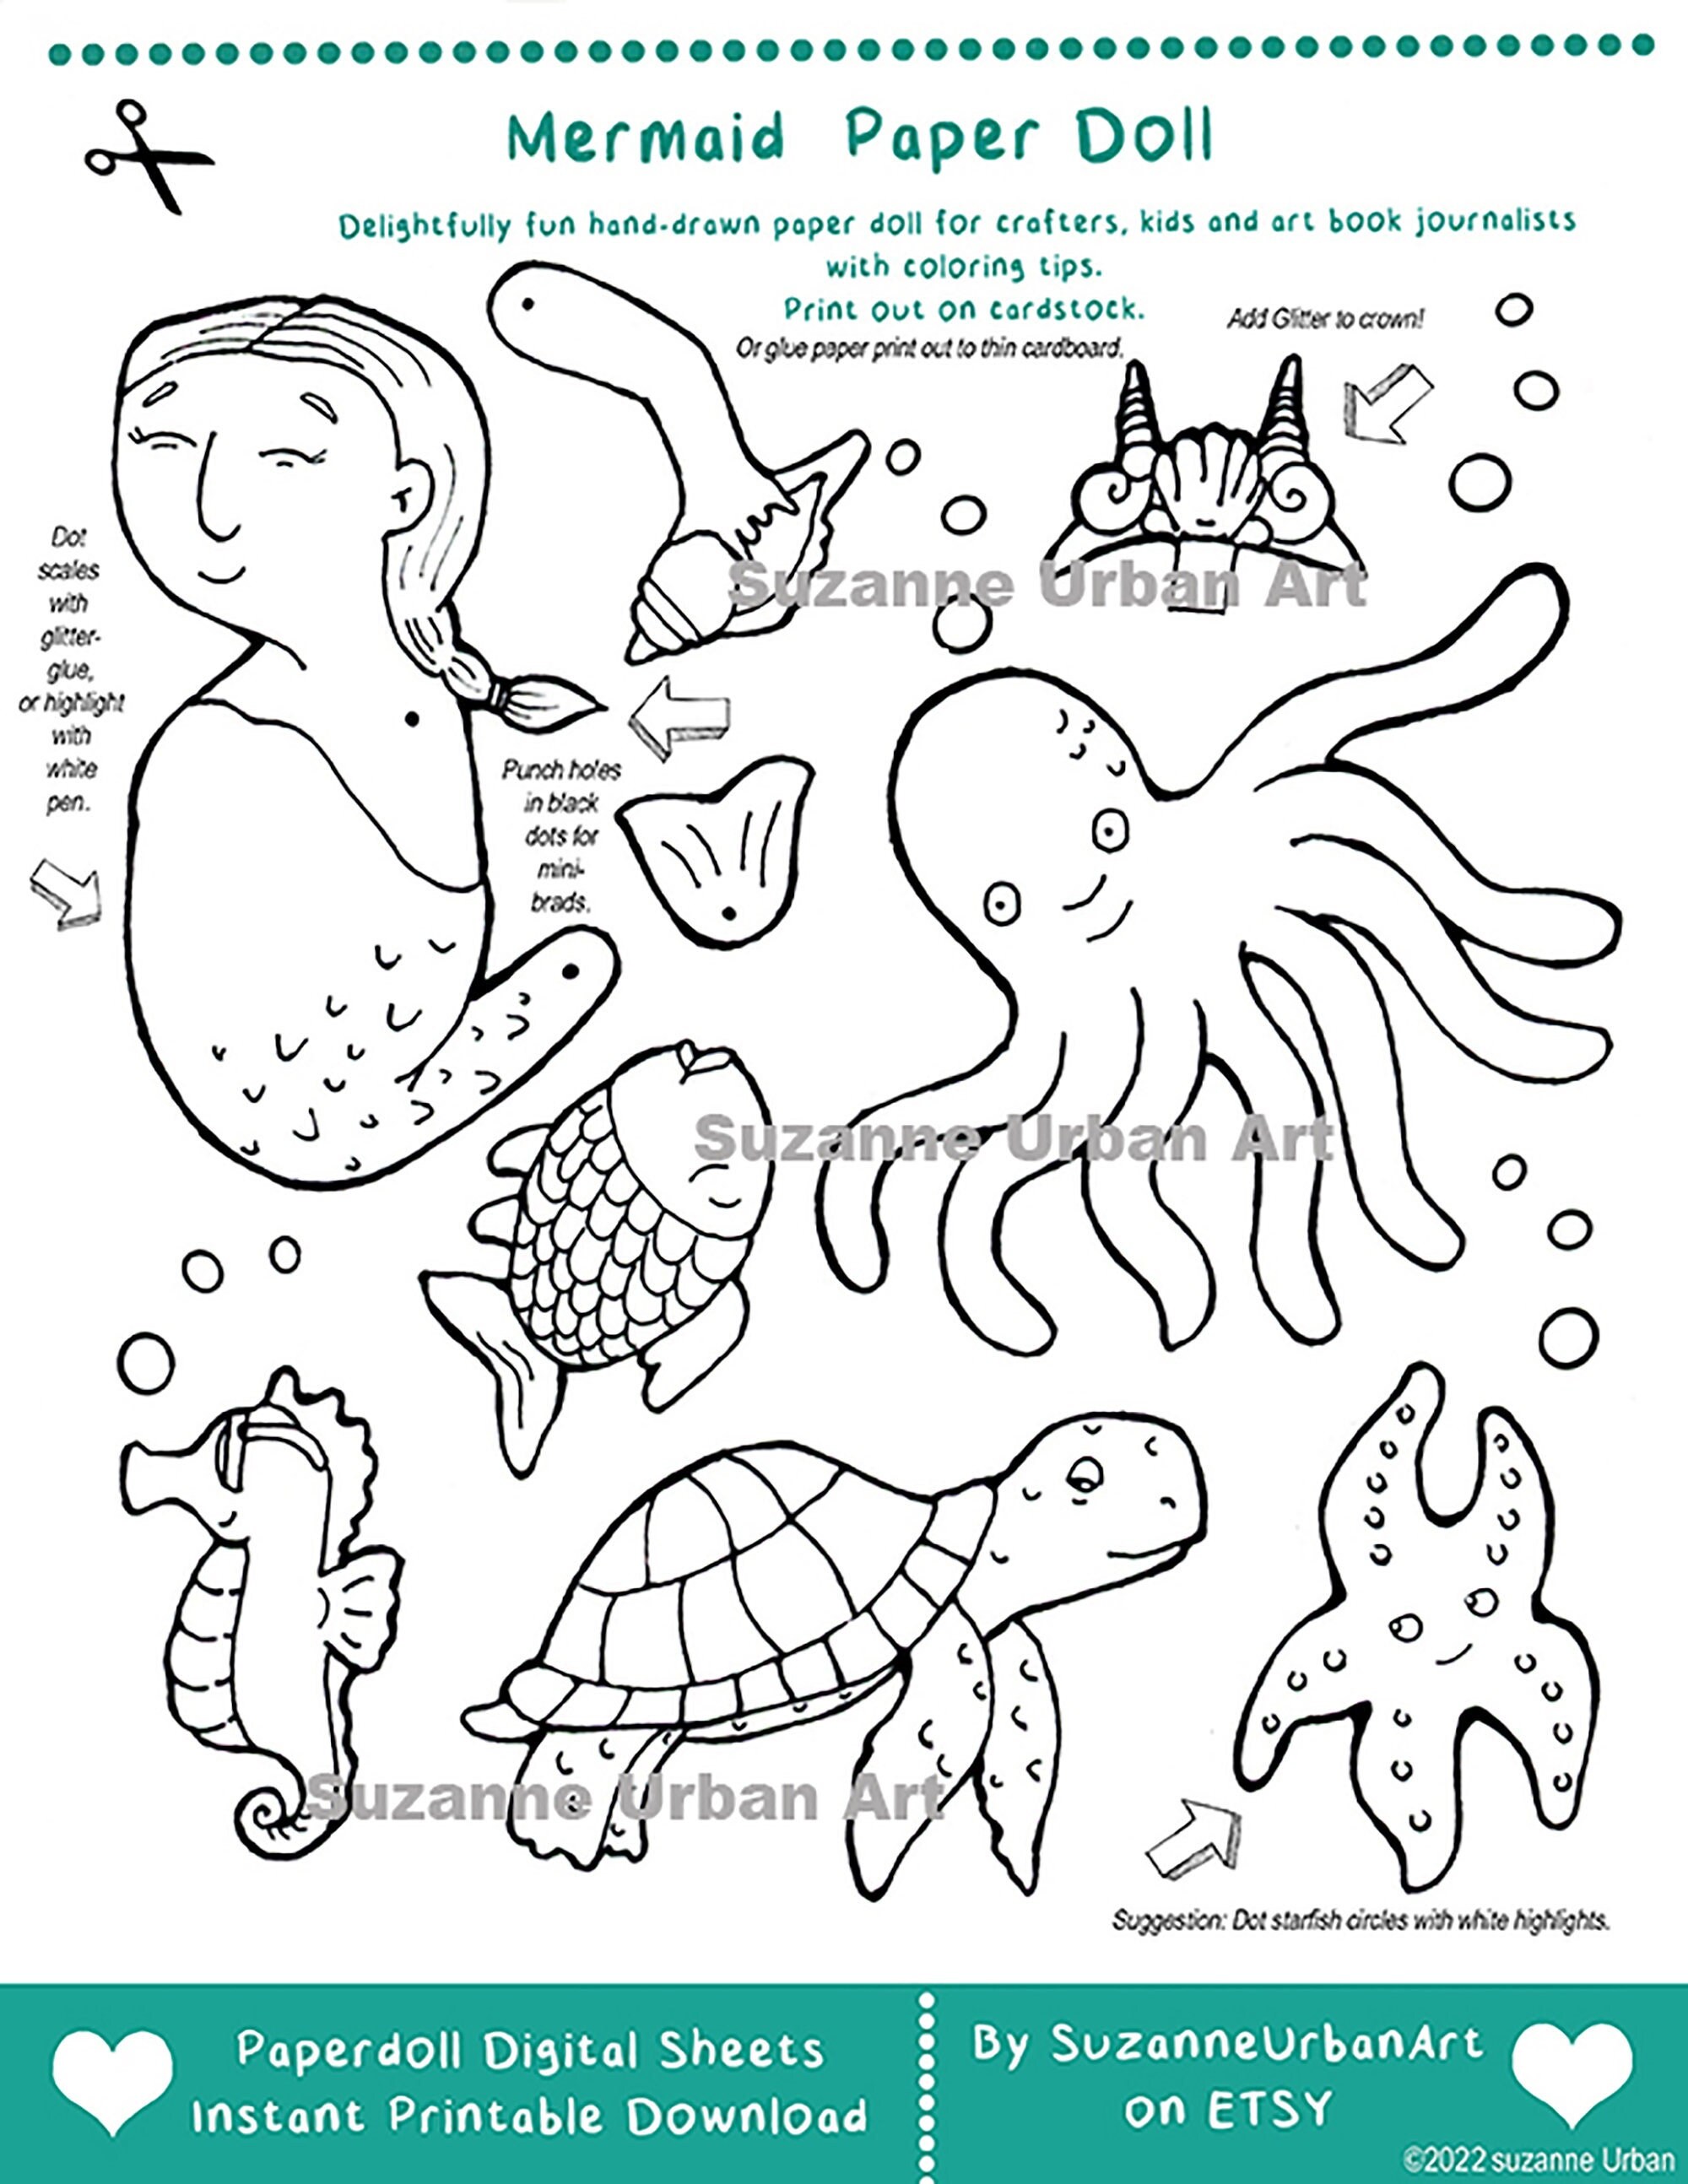 Illustrated Paper Doll Mermaid - papercatdesign